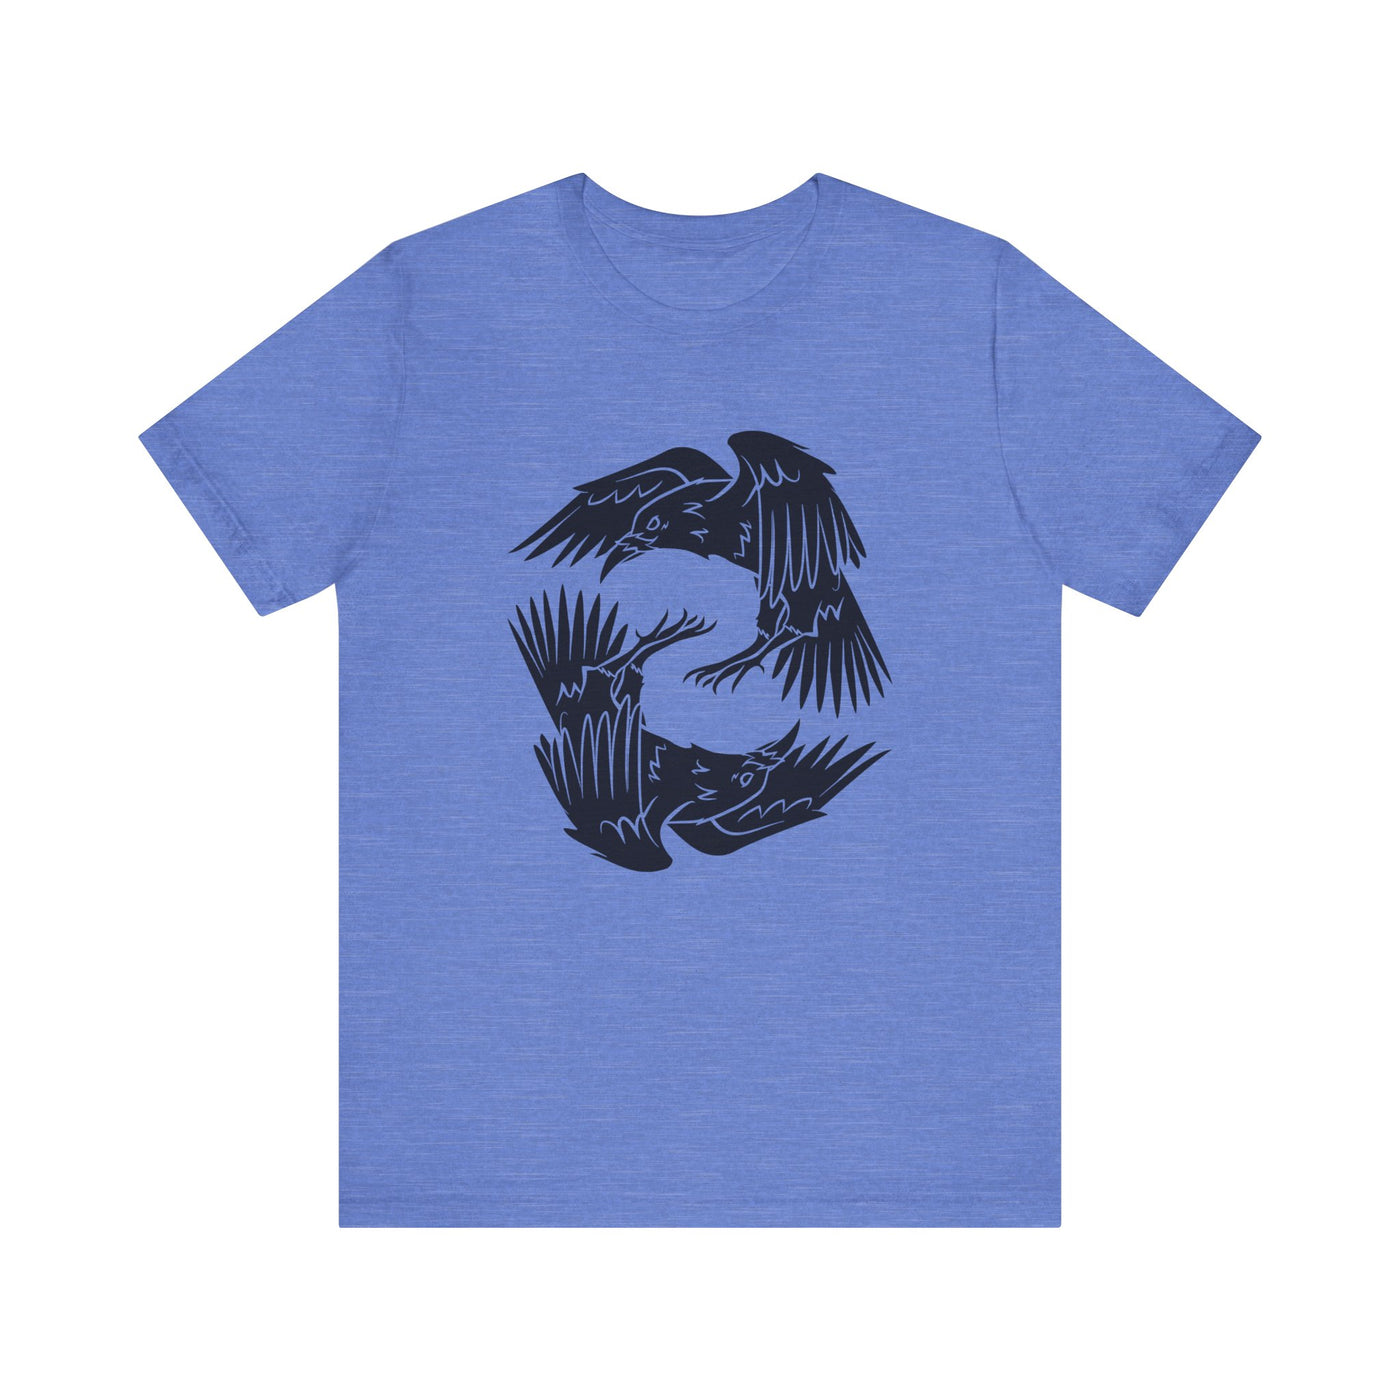 Odin's Ravens Unisex T-Shirt